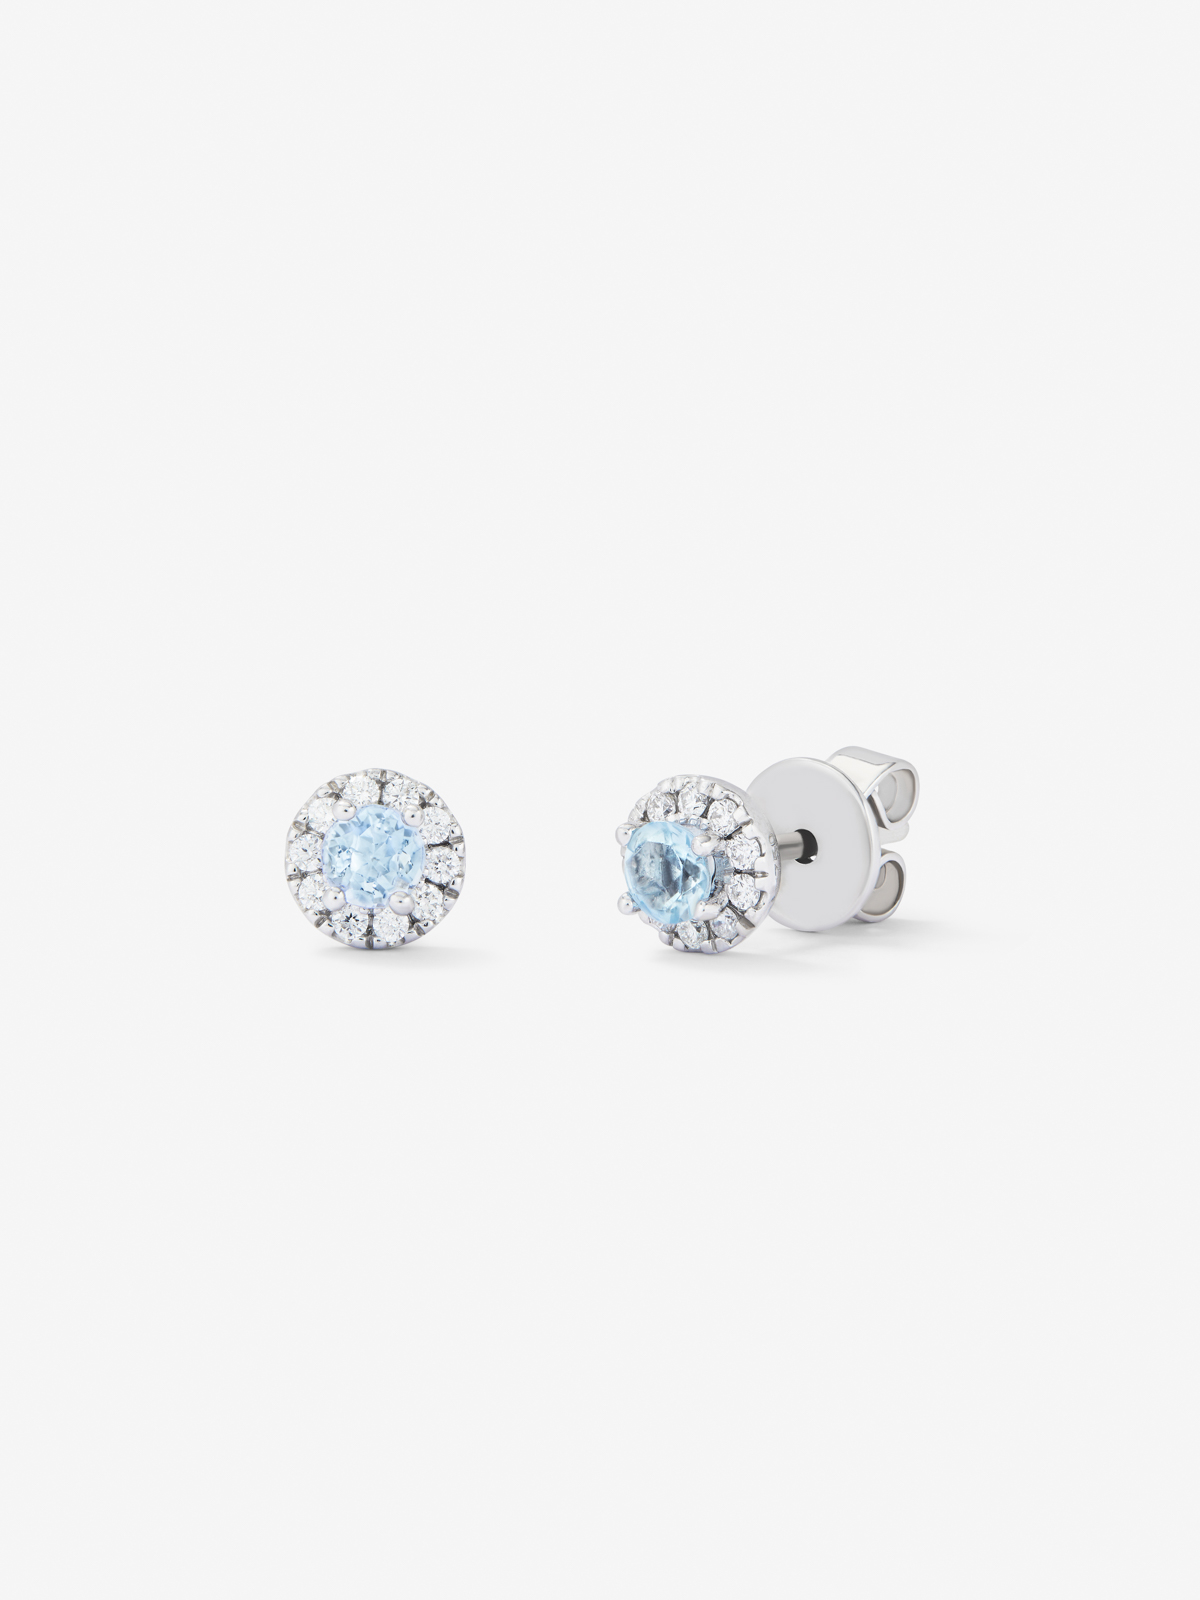 18K white gold halo earrings with aquamarine and diamond.